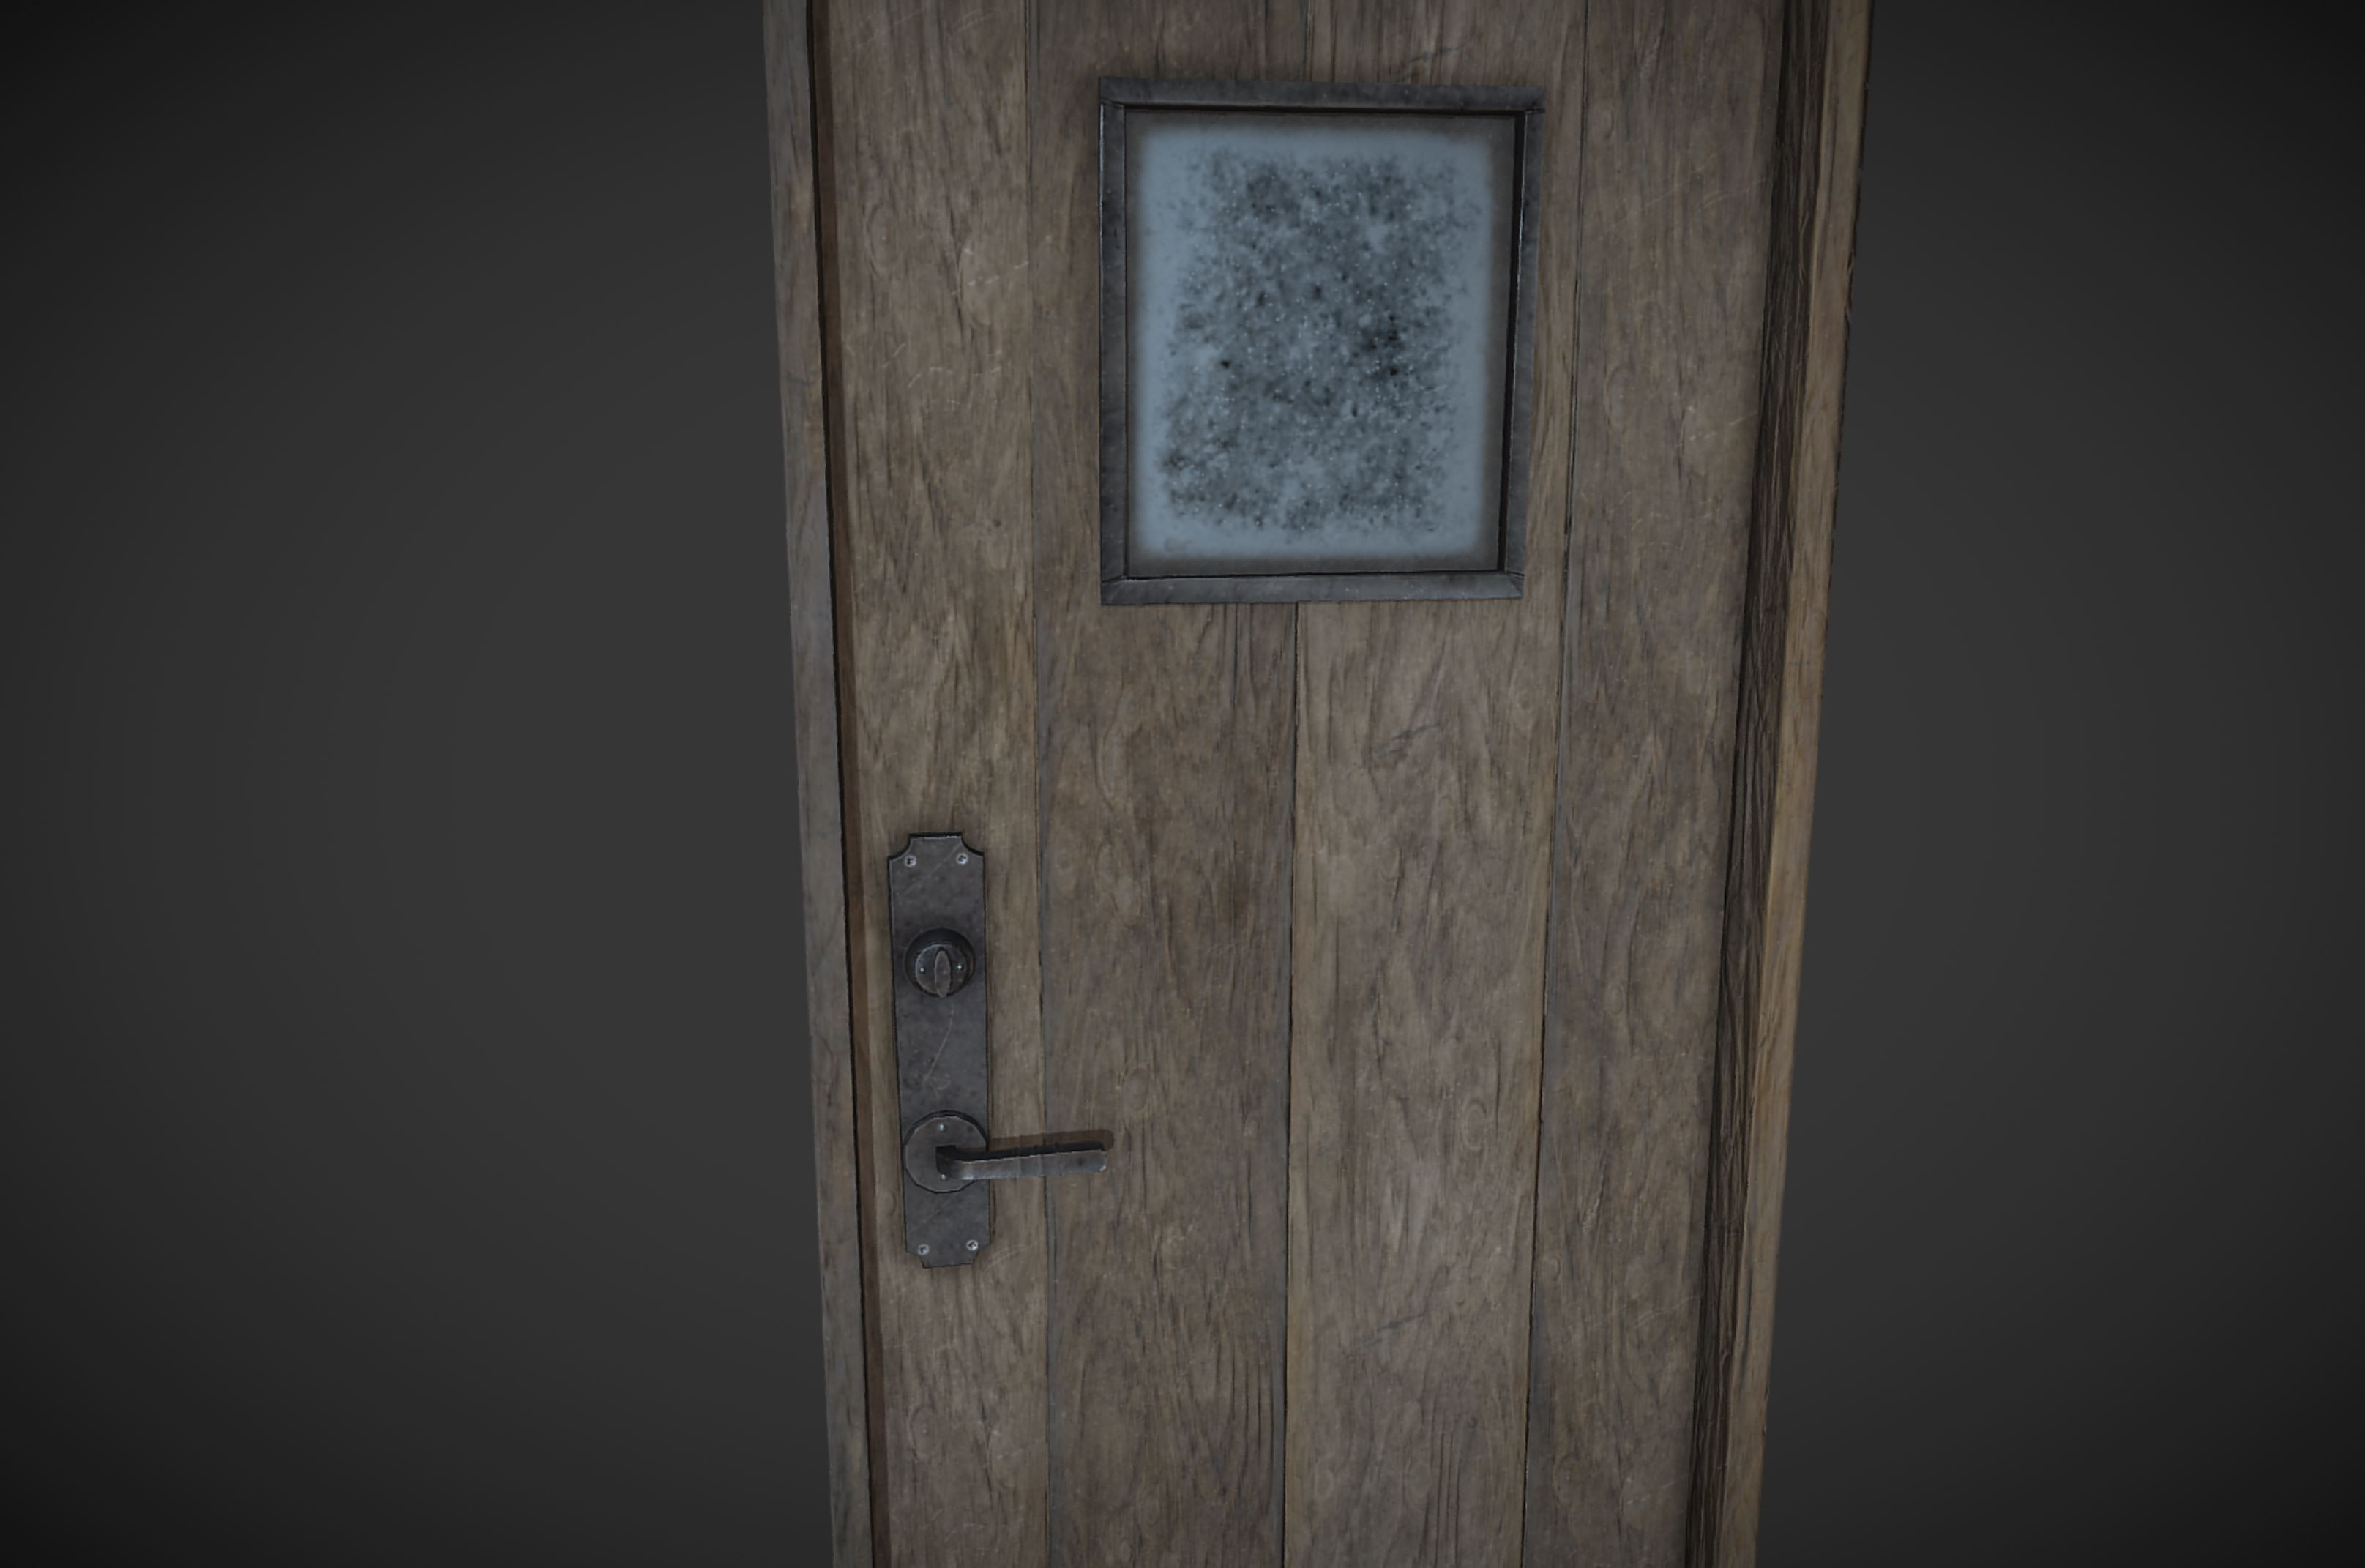 Rustic door for The Shadows Lengthen game